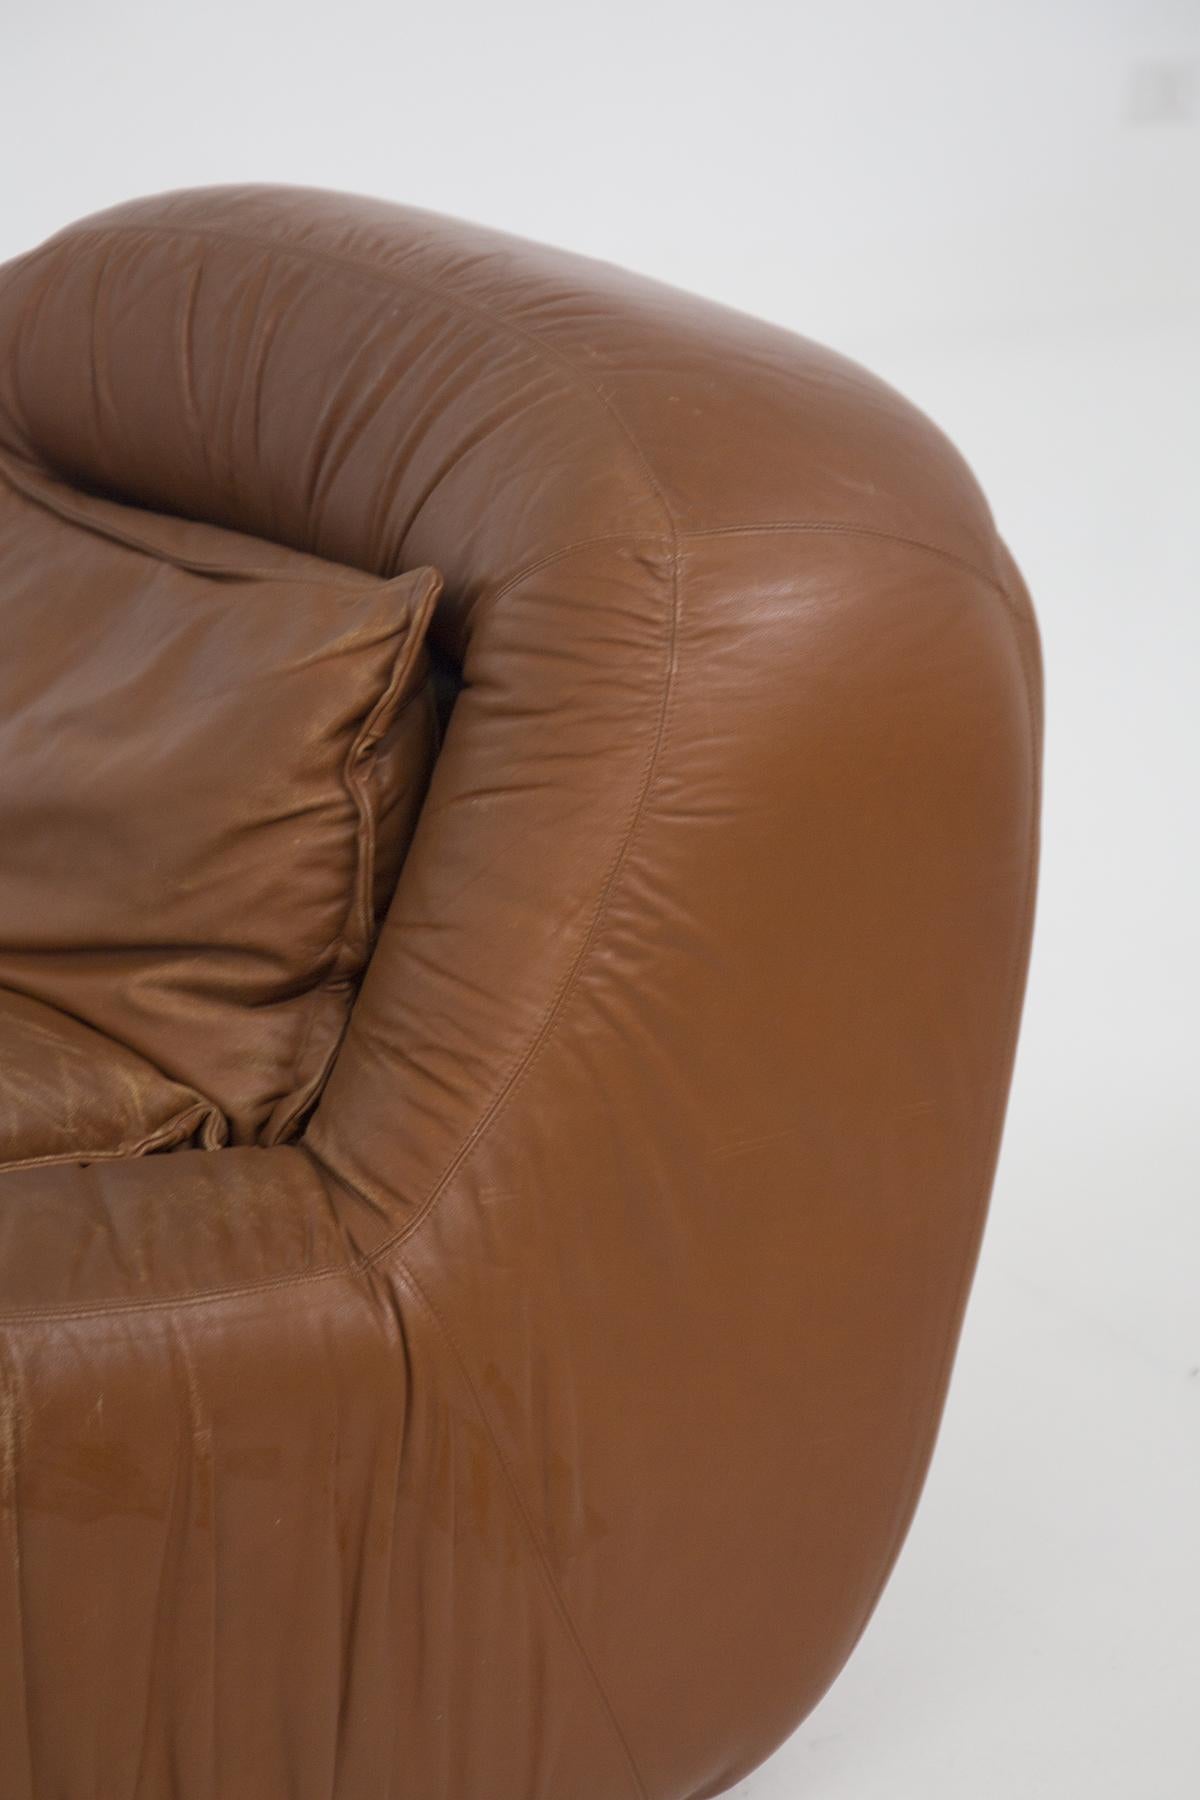 De Pas, D'Urbino, Lomazzi Vintage Leather Armchairs 'Attr' In Good Condition In Milano, IT